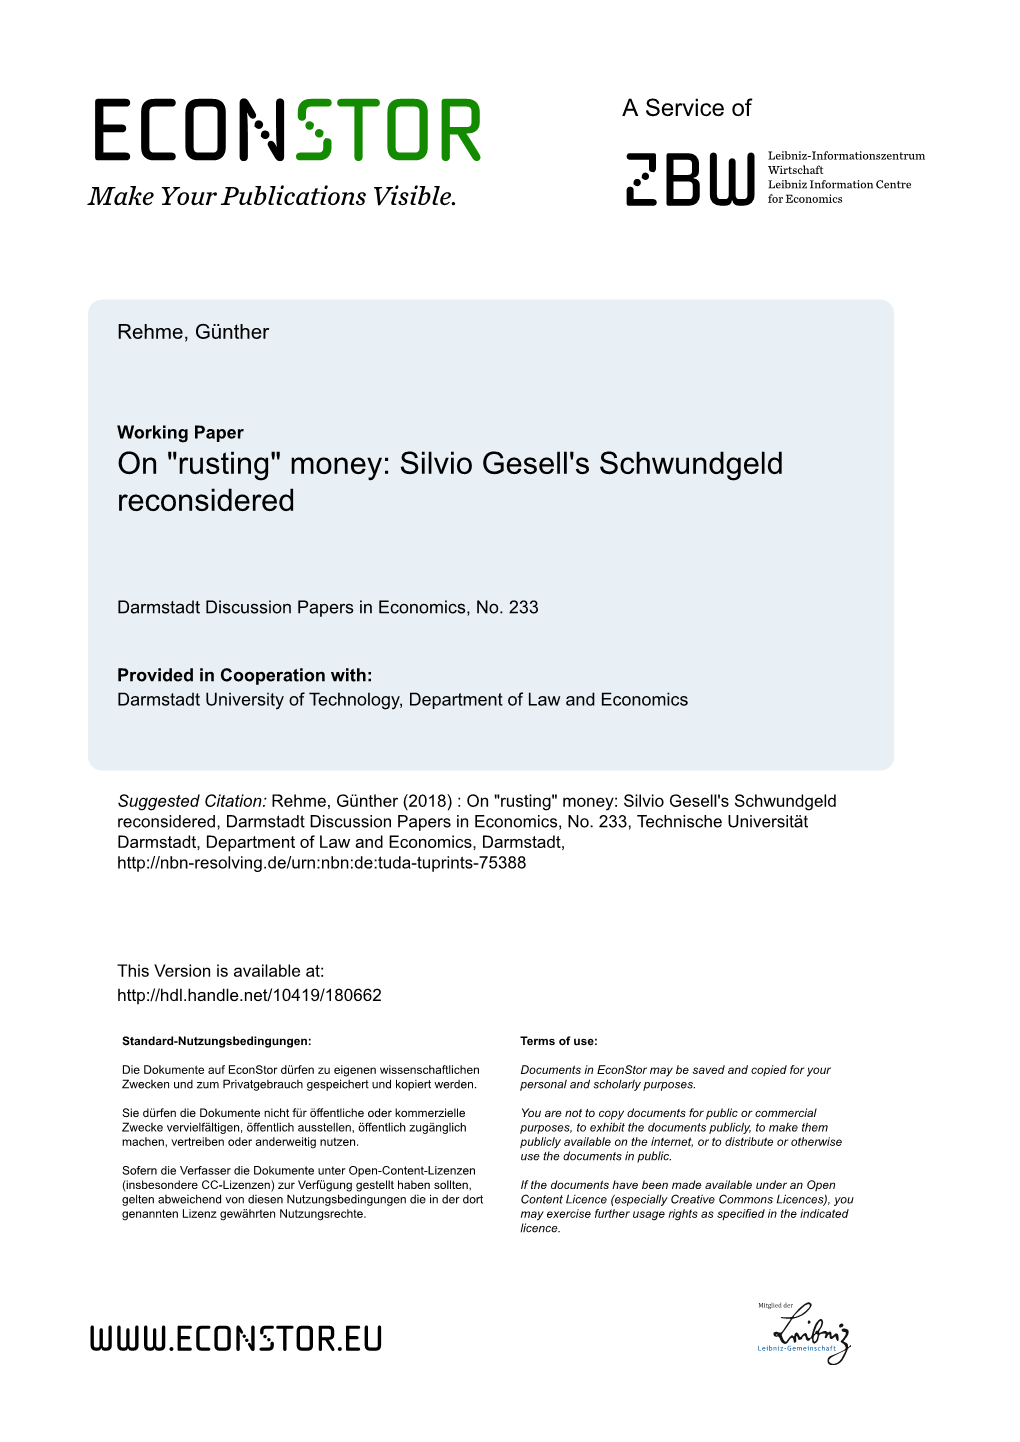 Money: Silvio Gesell's Schwundgeld Reconsidered